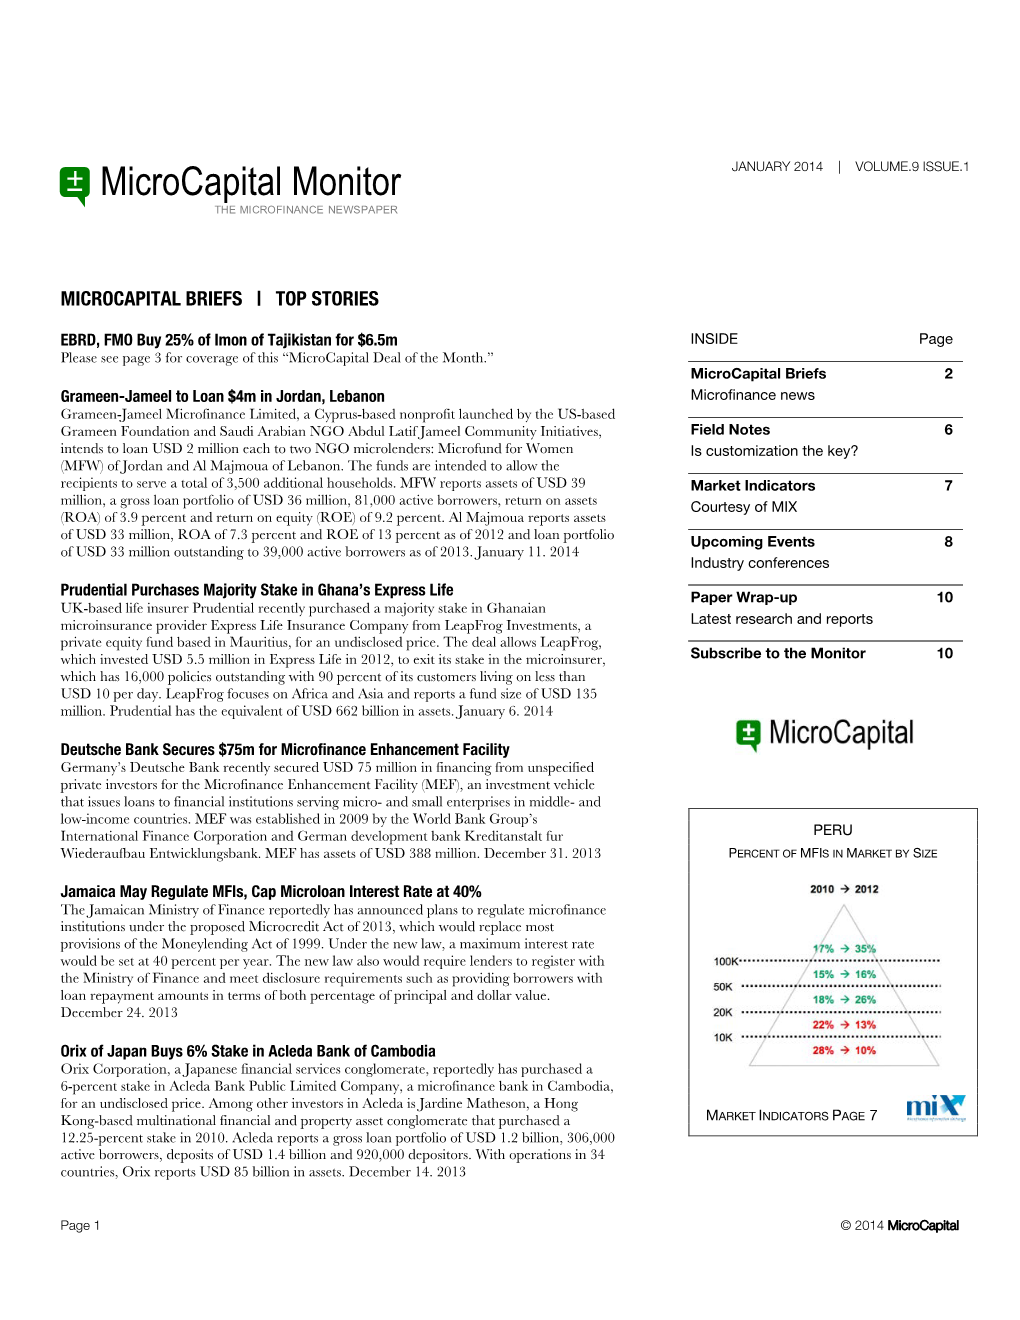 Microcapital Monitor JANUARY 2014 | VOLUME.9 ISSUE.1 the MICROFINANCE NEWSPAPER